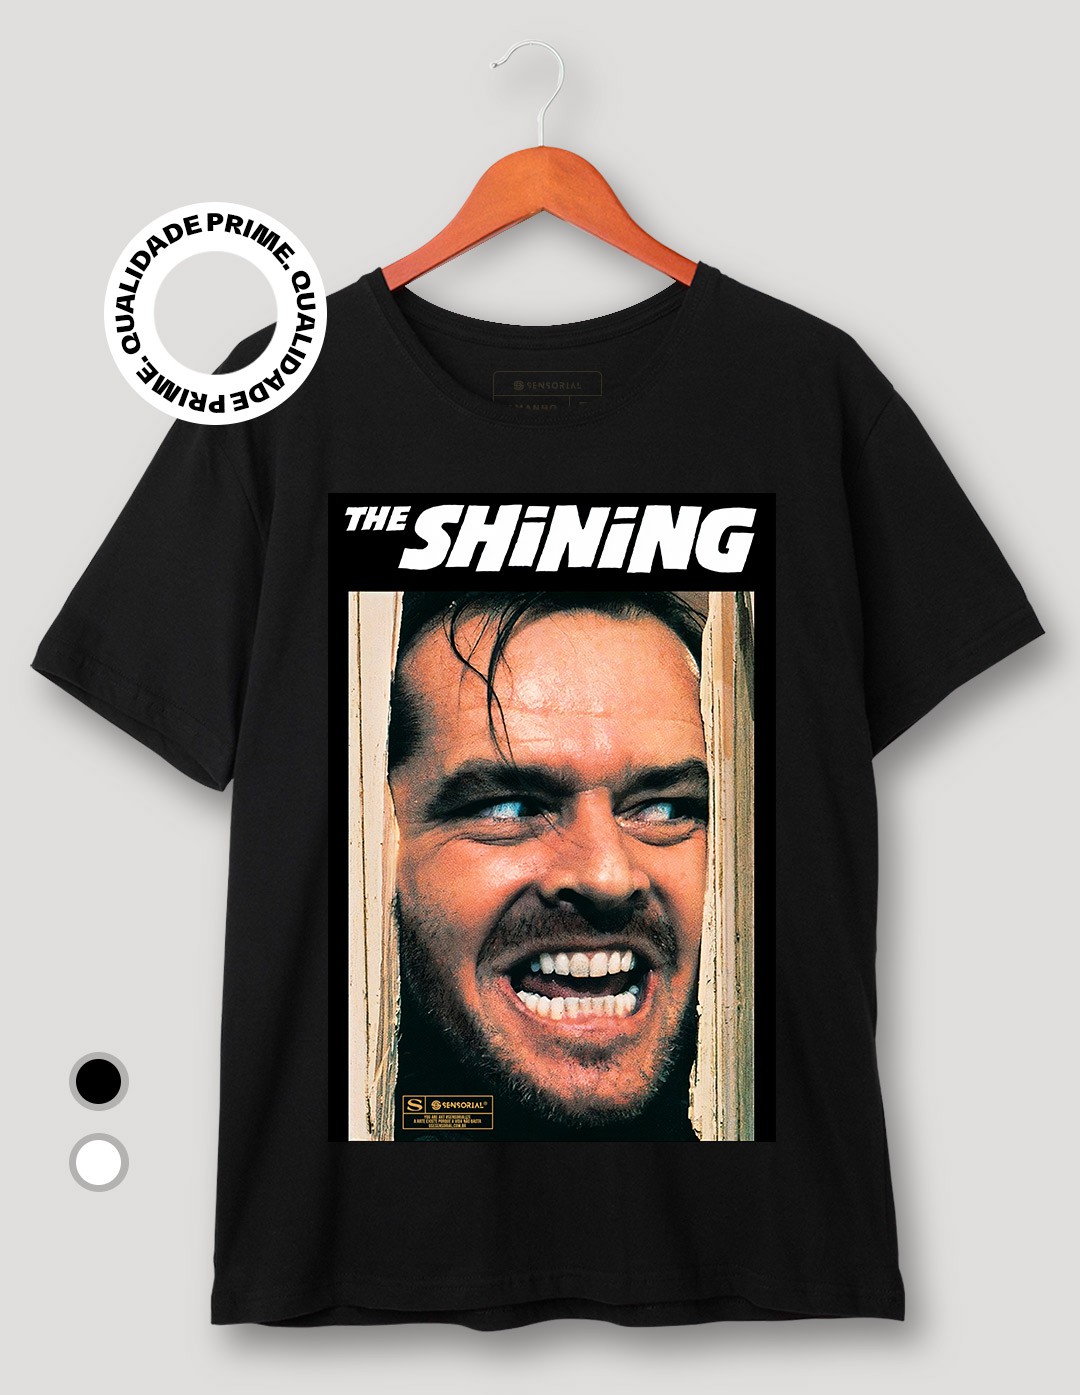 Camiseta The Shining O Iluminado - Sensorial, camisetas exclusivas, compre  online